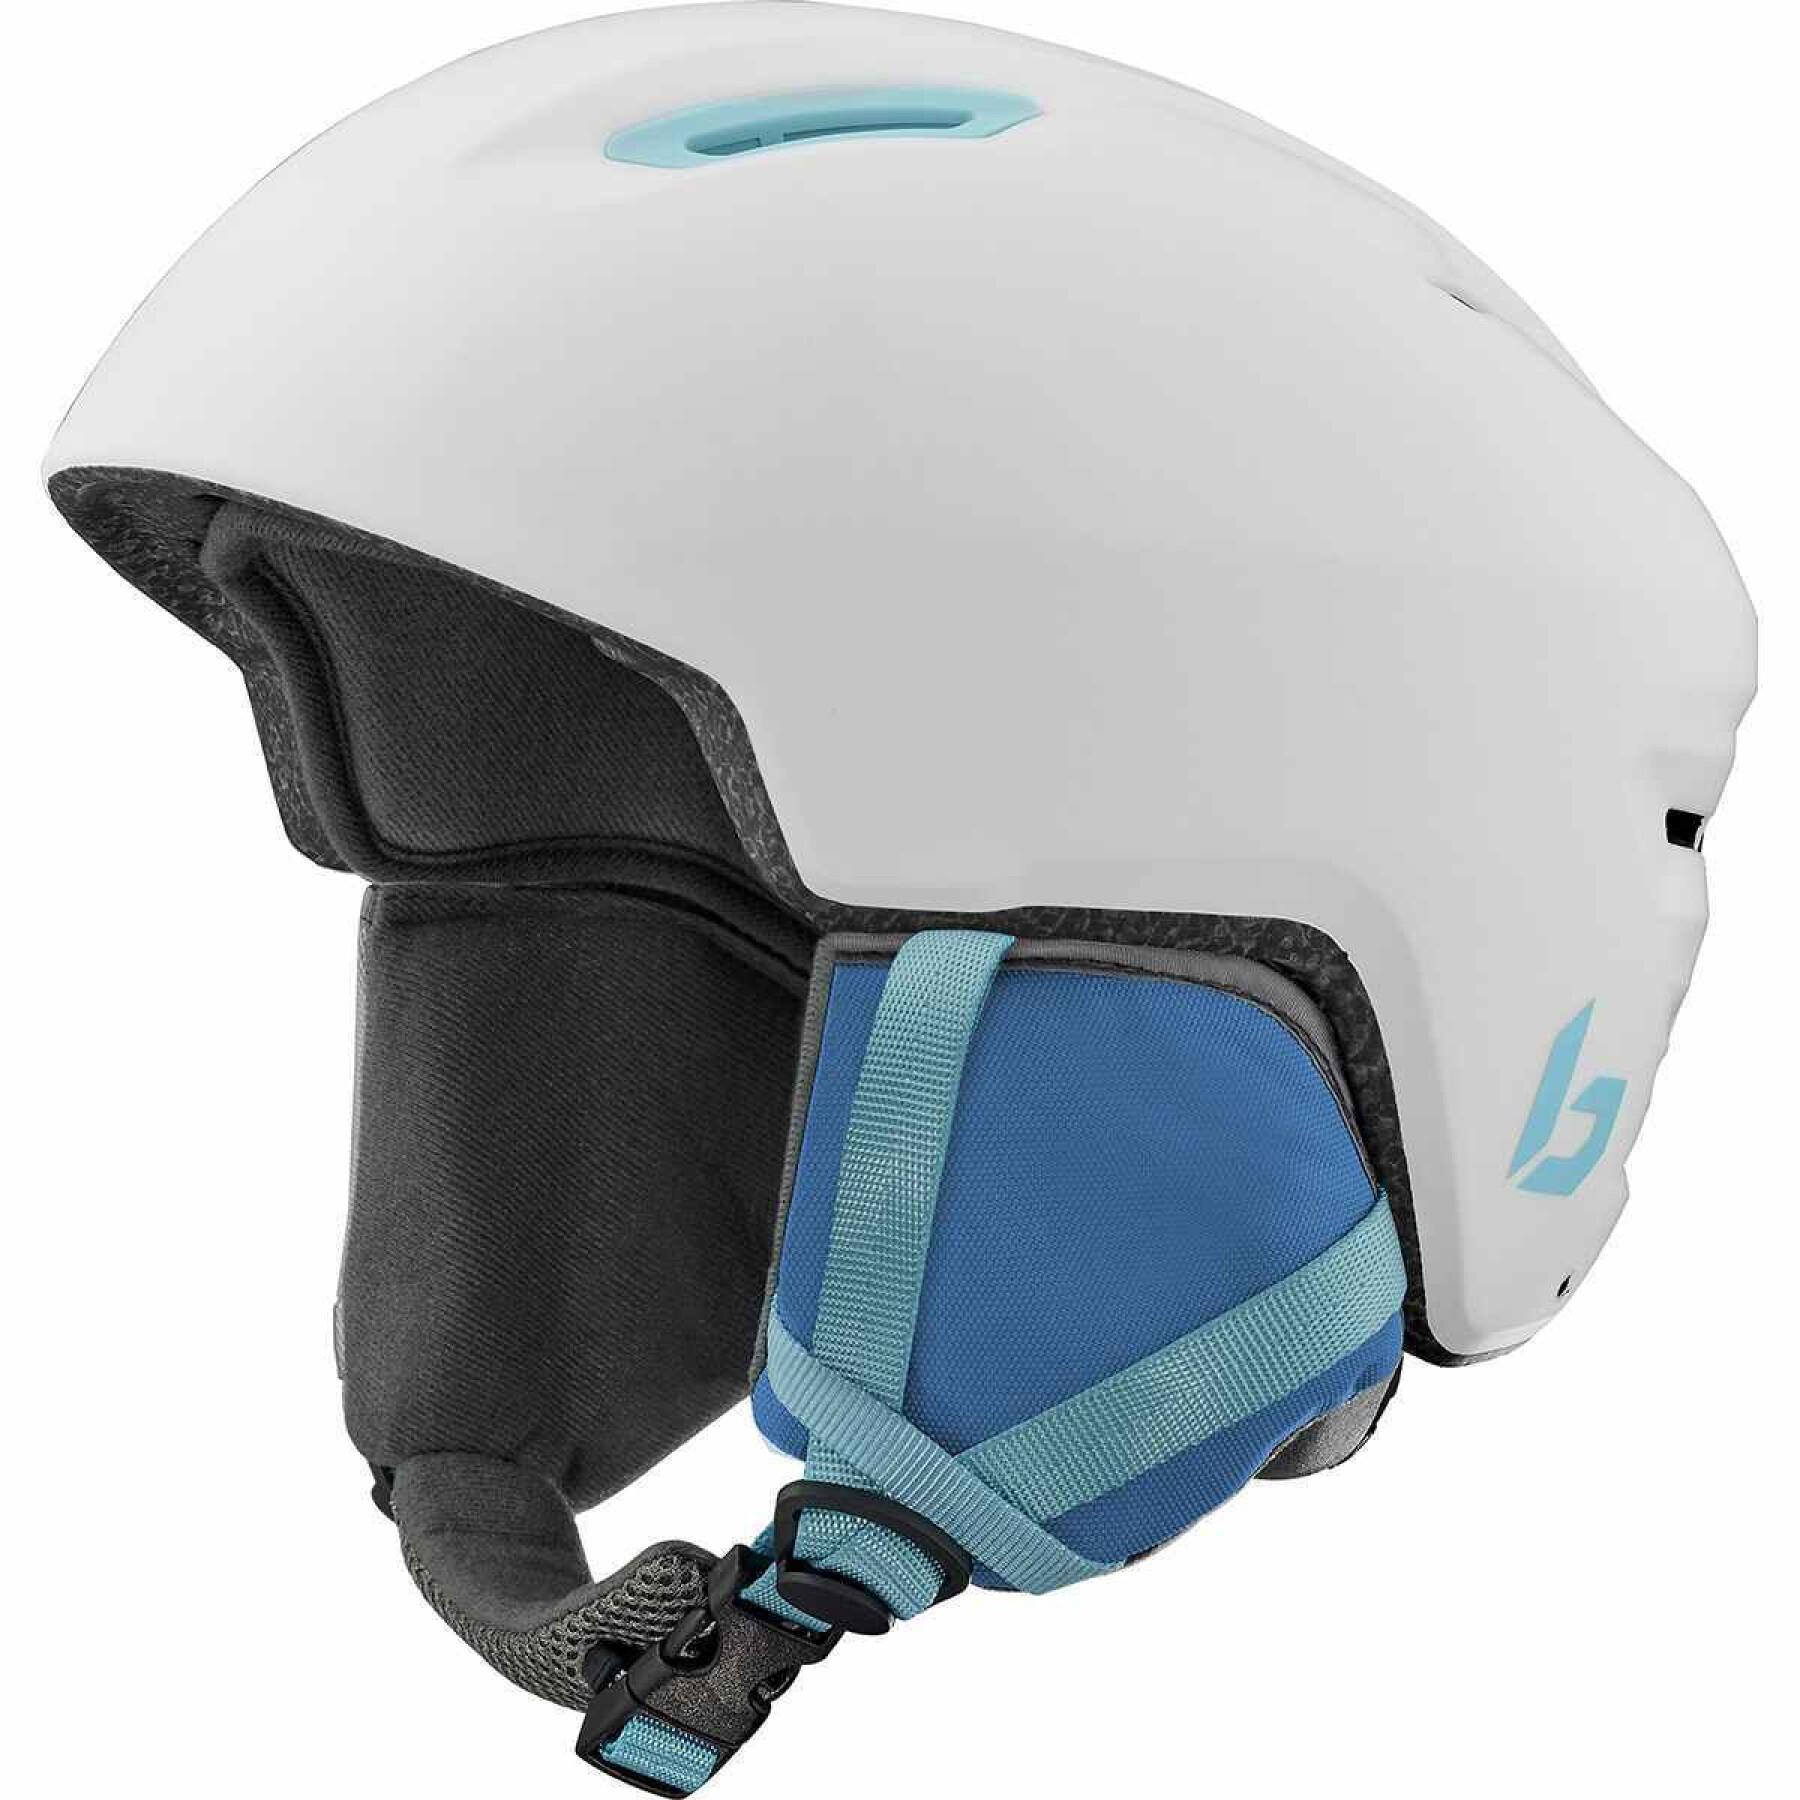 Kinder-Ski-Helm Bollé Atmos